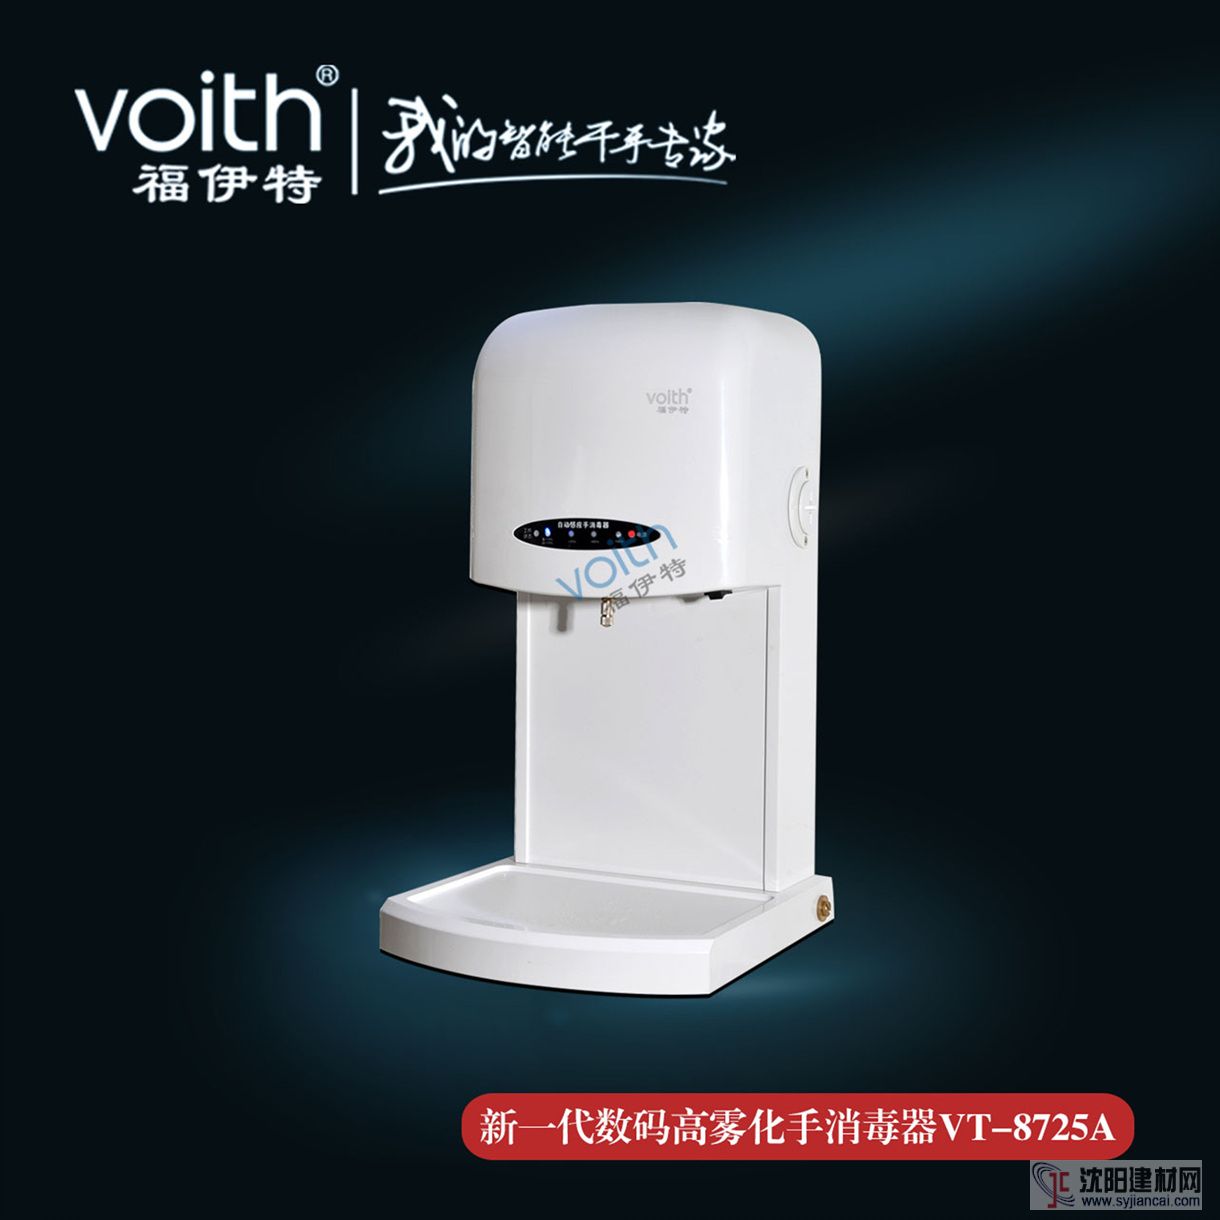 VOITH福伊特感应式手消毒器VT-8725A 全新4大升级